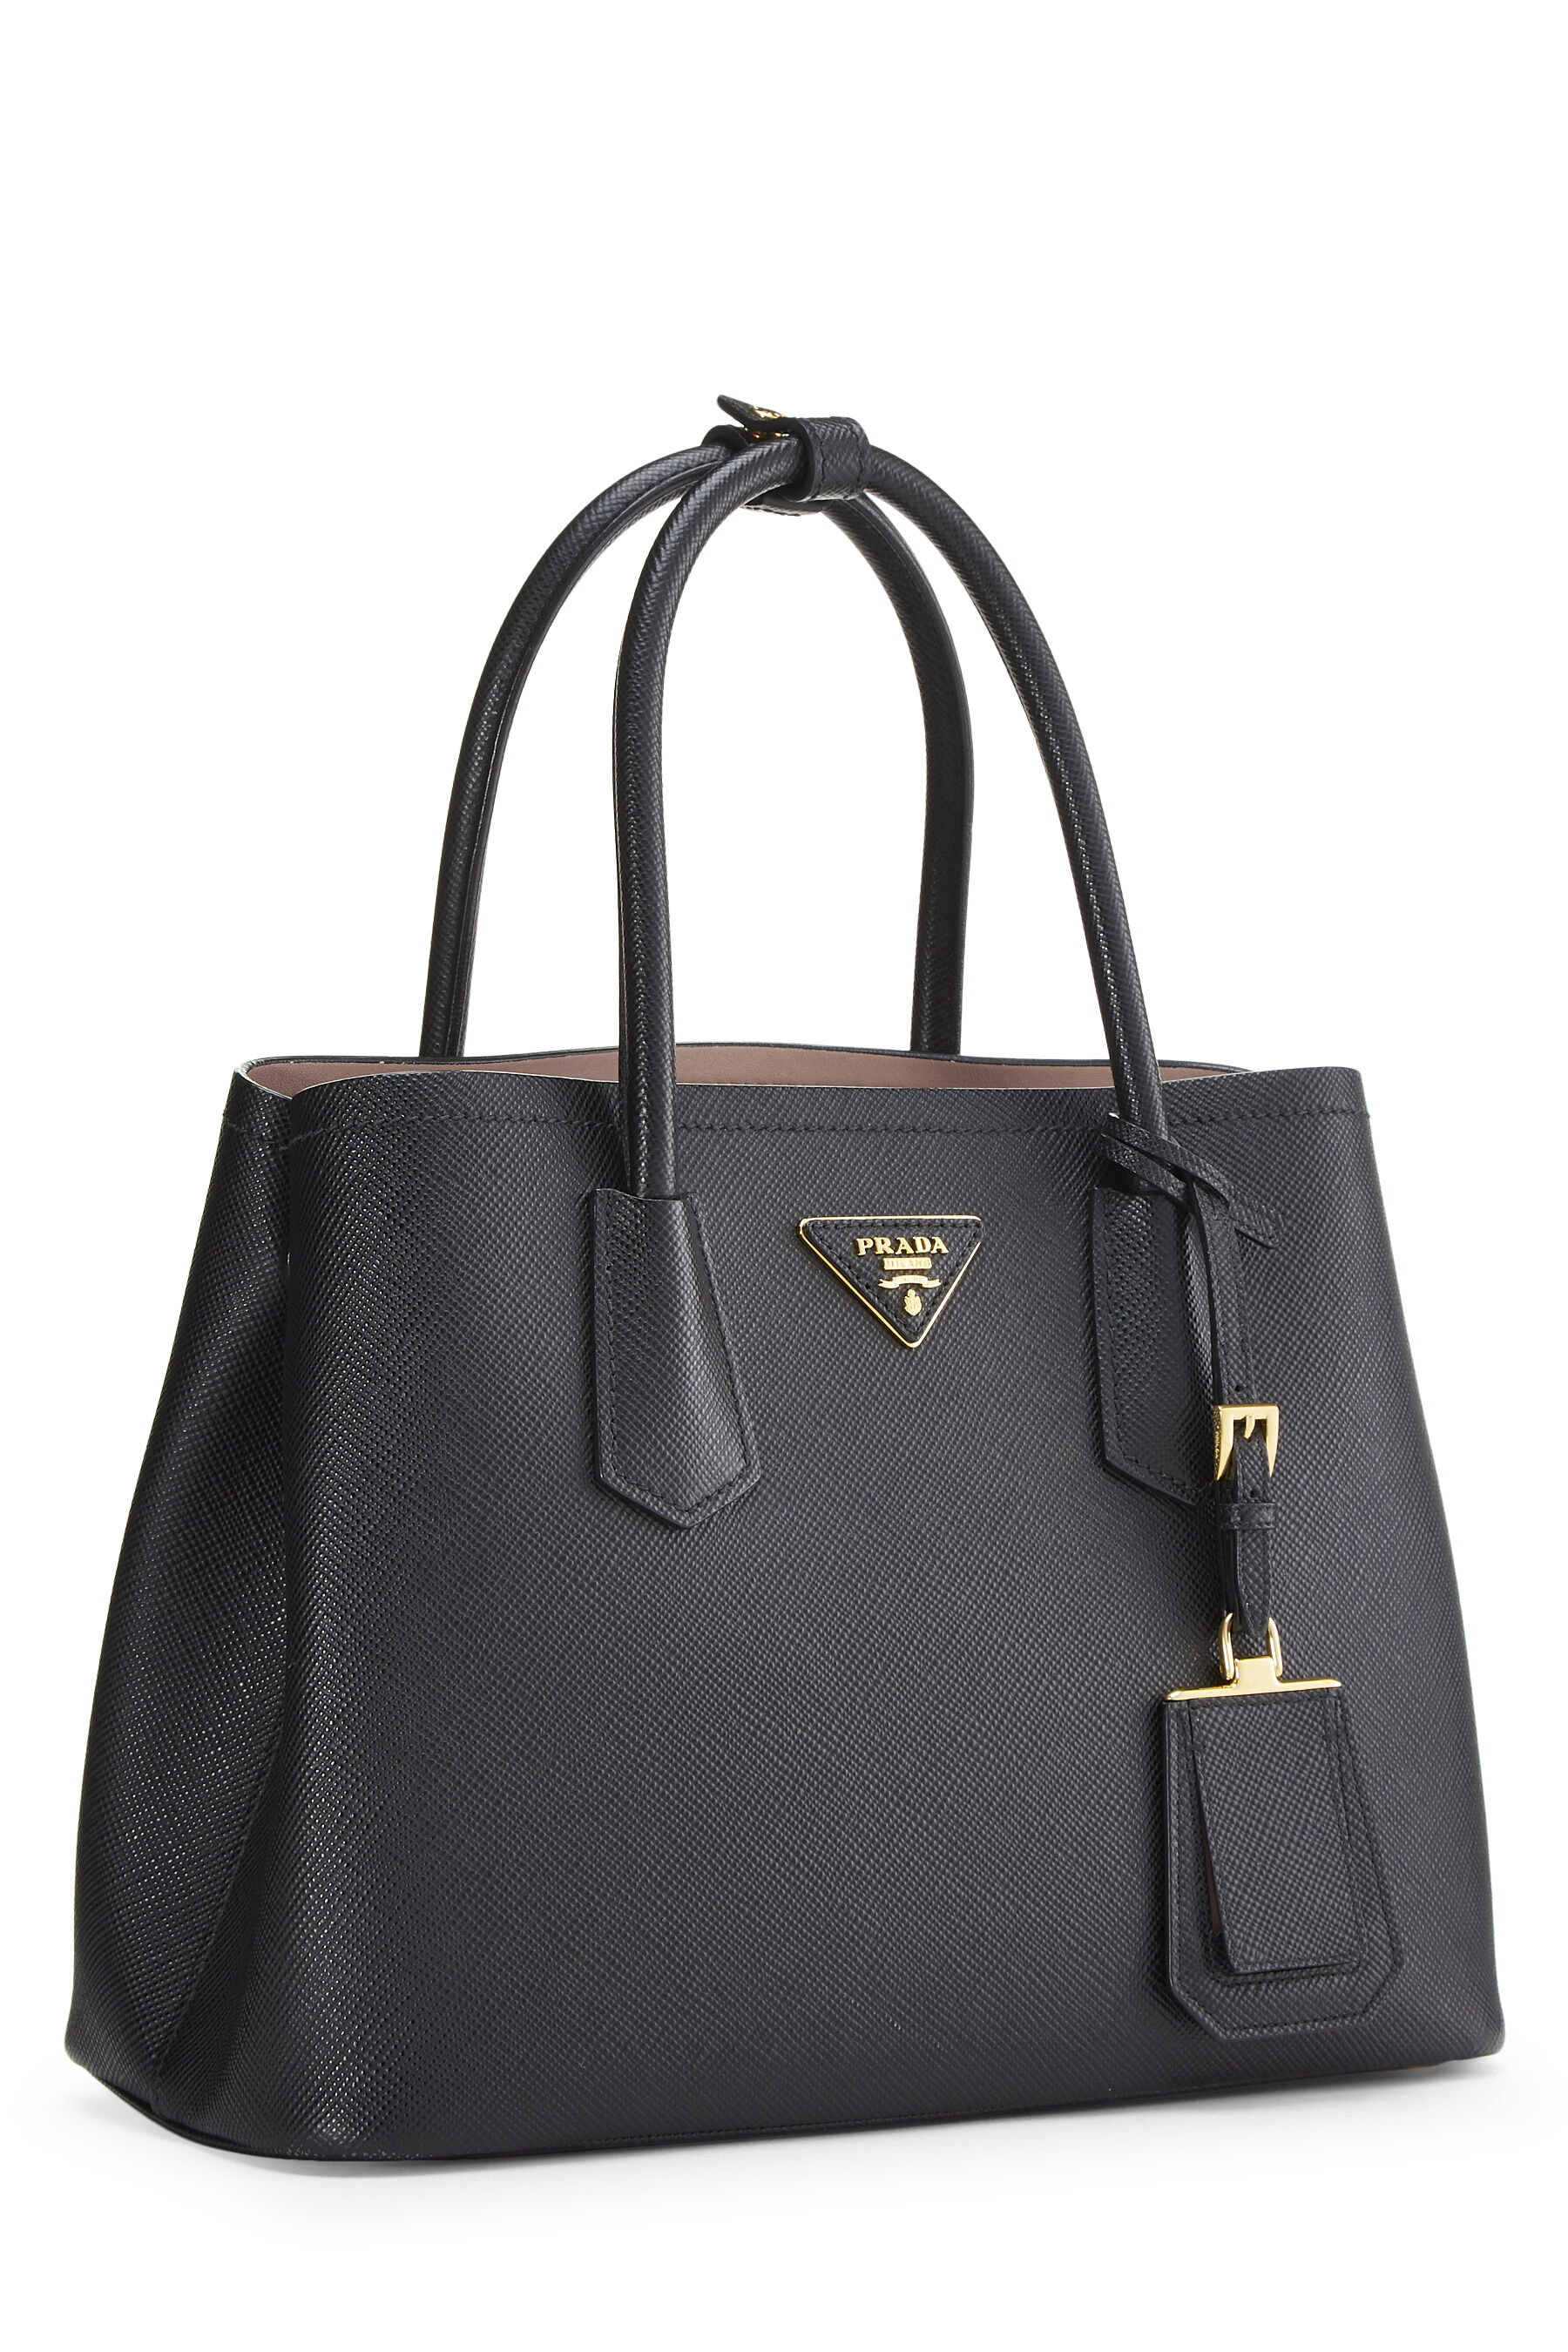 Prada - Black Saffiano Double Bag Small